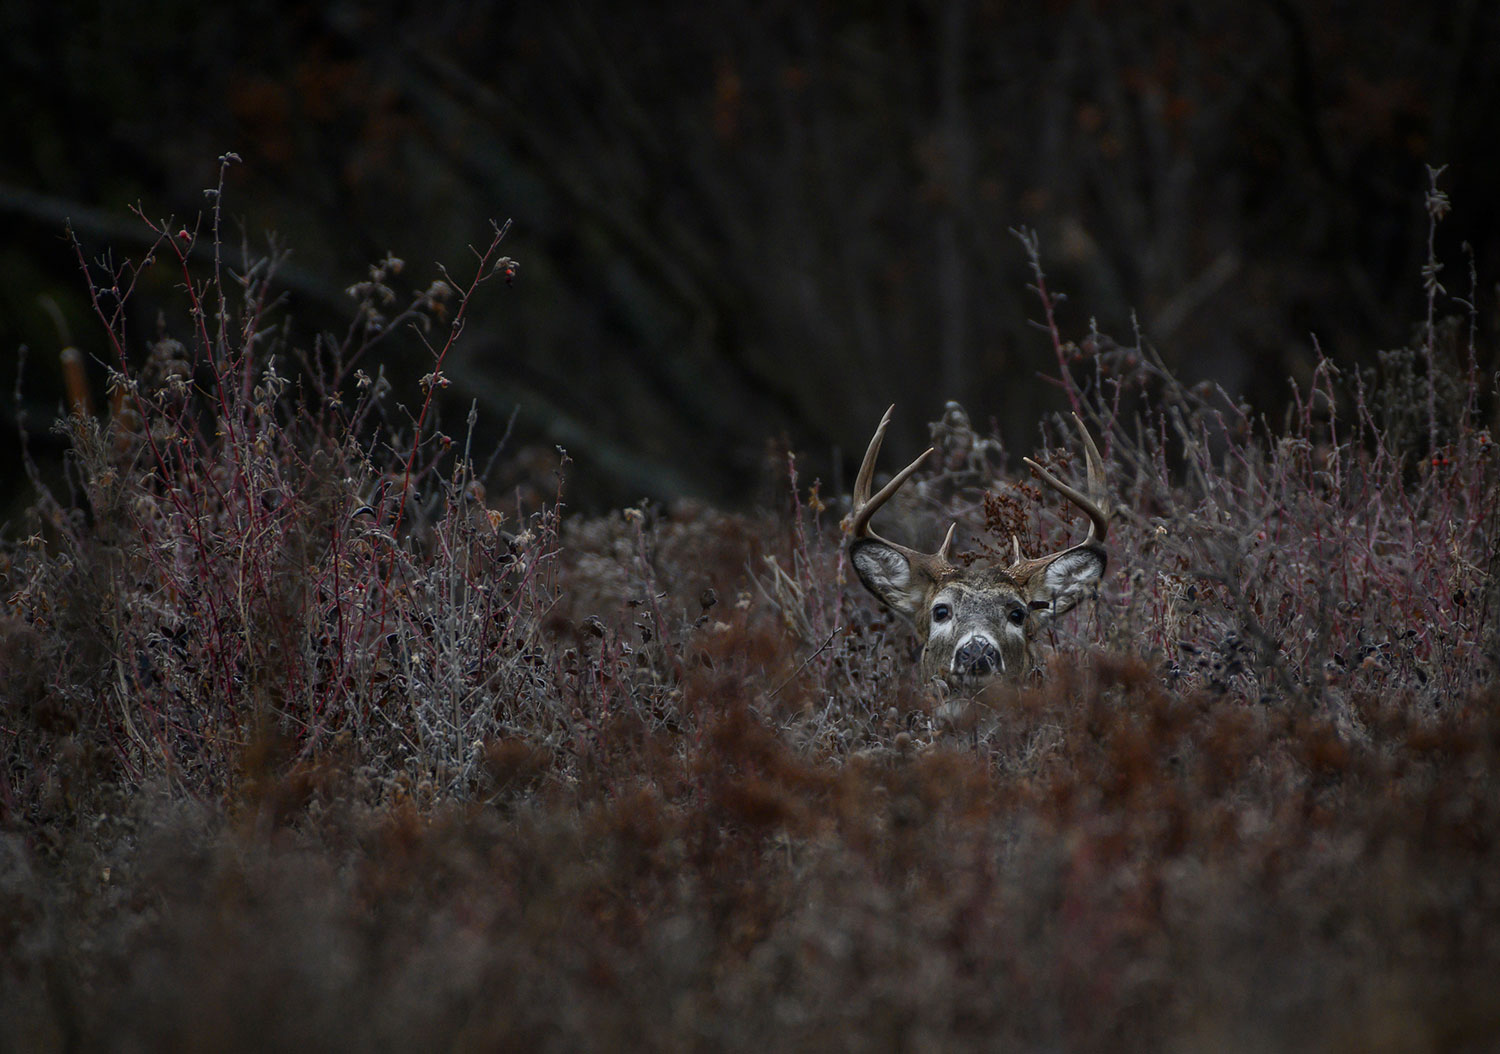 A whitetail deer's head peeking over tall grass in a field.